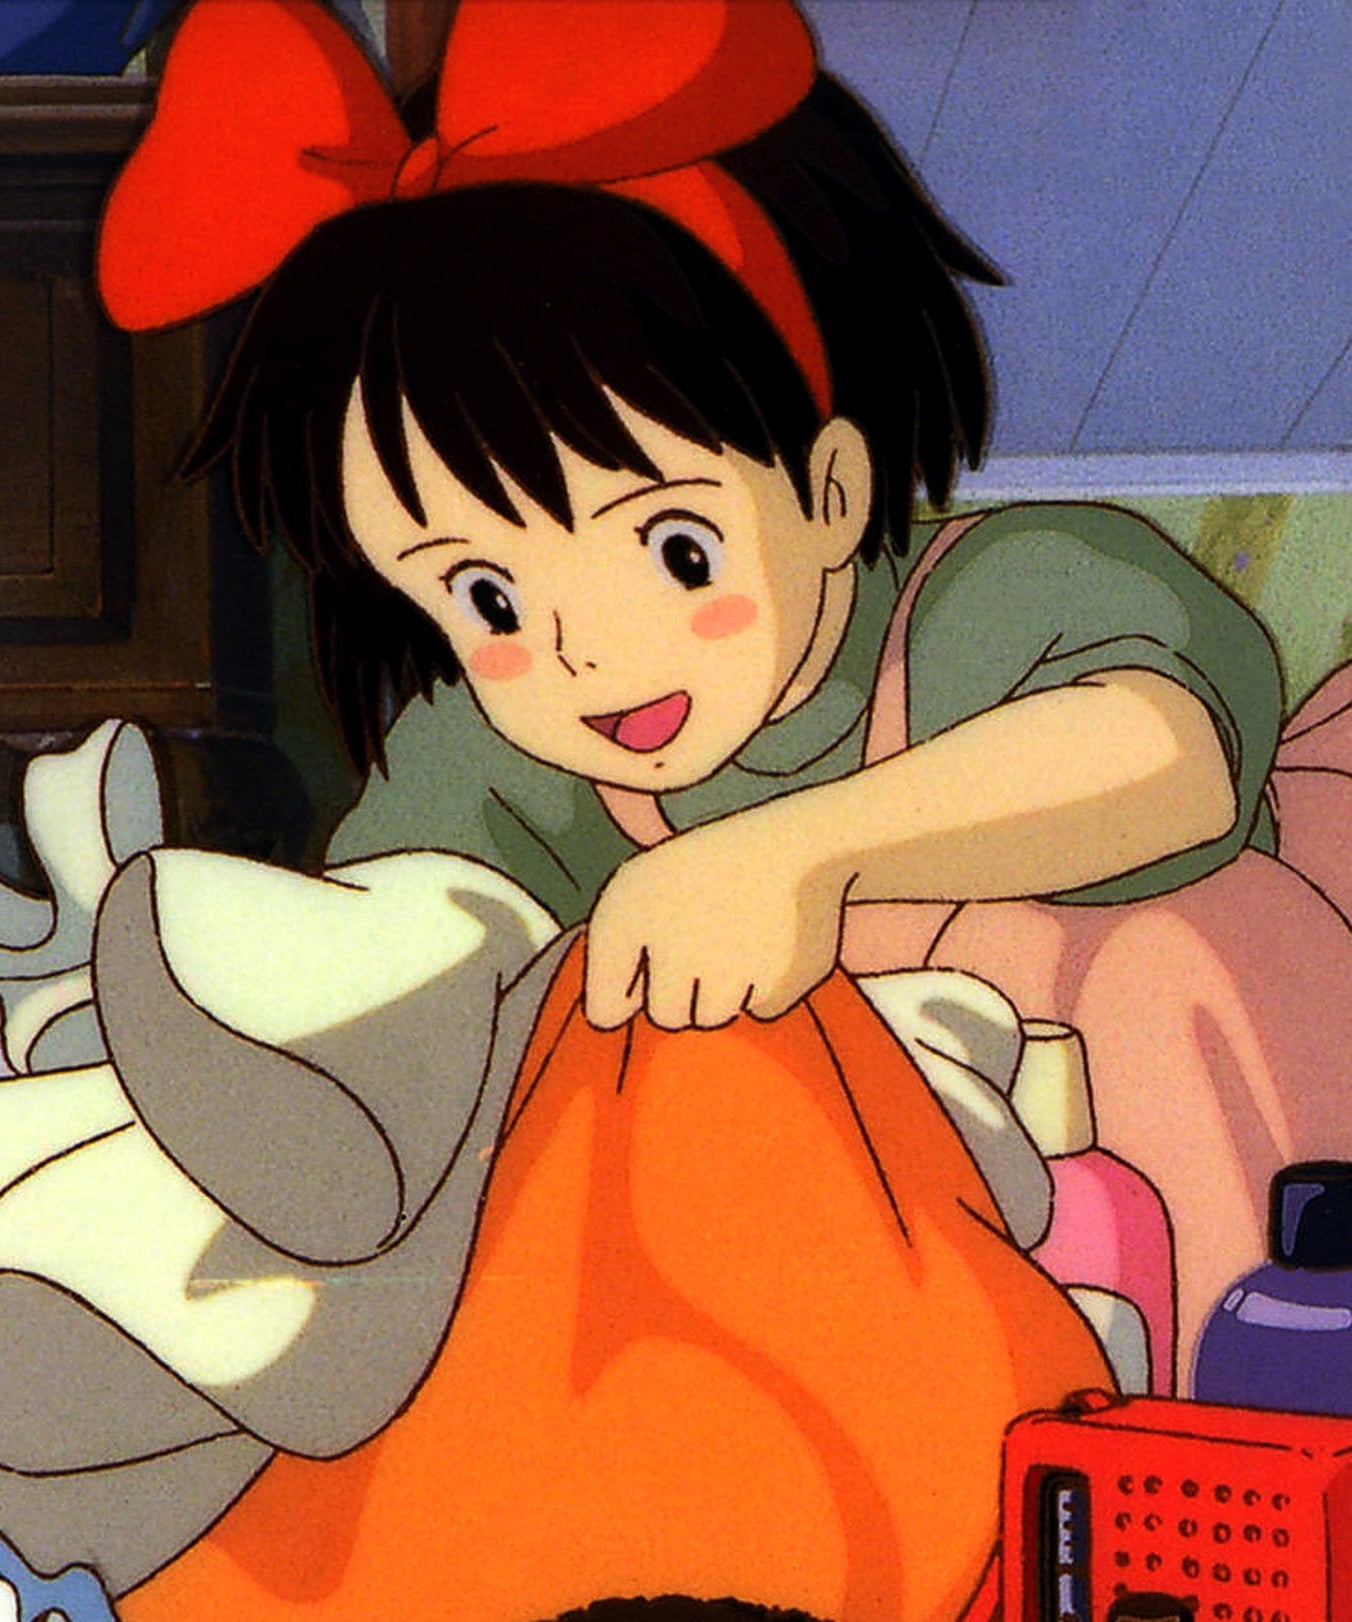 Prepare to be spirited away: as if by magic, Studio Ghibli is back